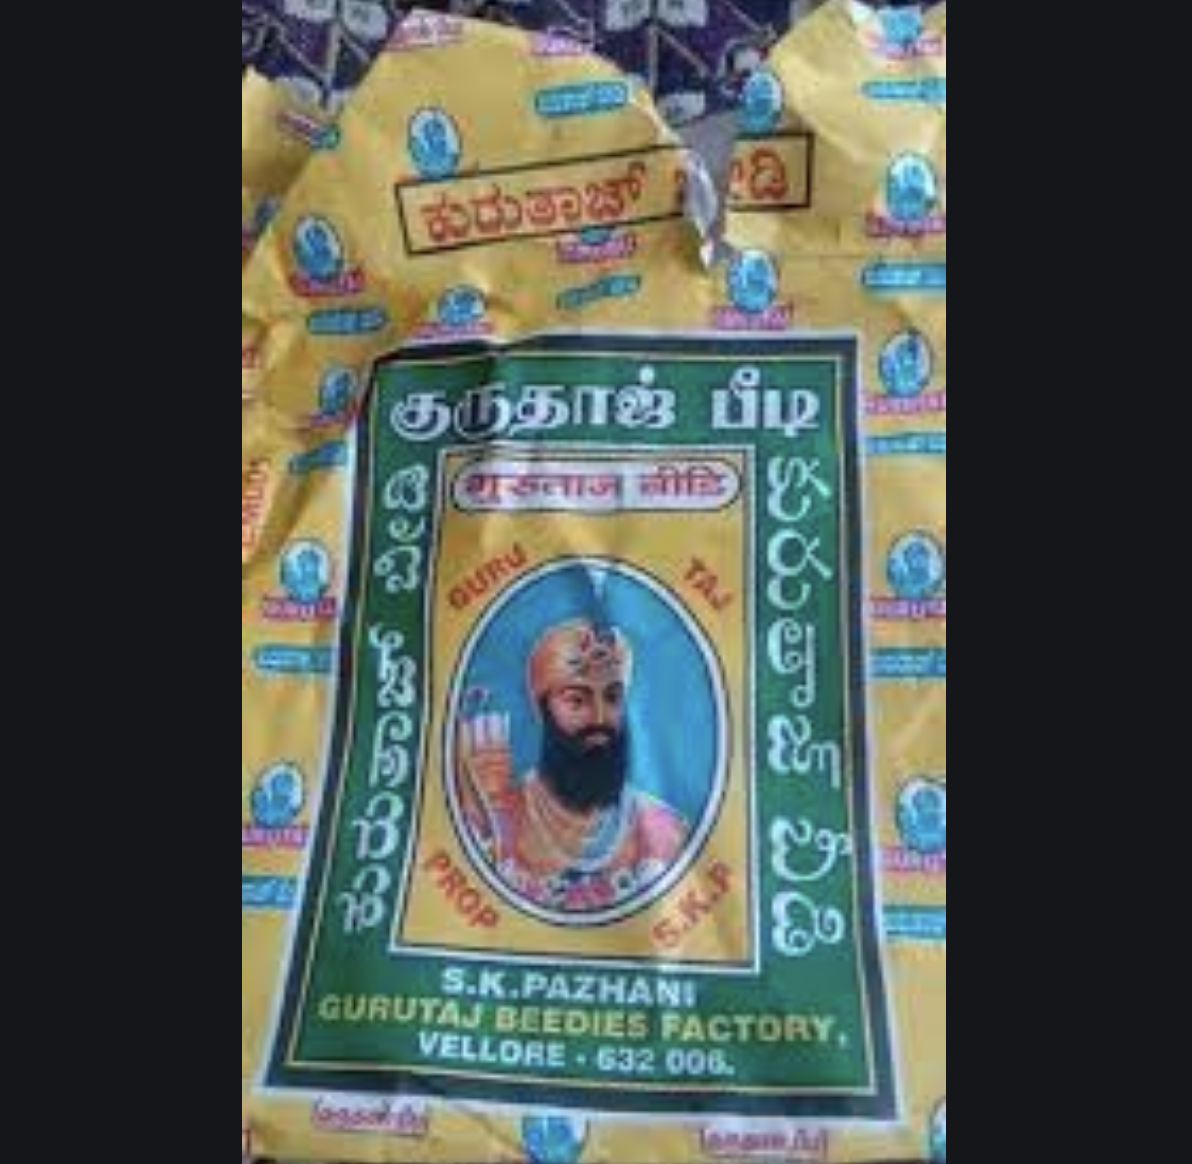 Guru Gobind Singh ji’s Picture Printed on Tobacco Product in Tamil Nadu